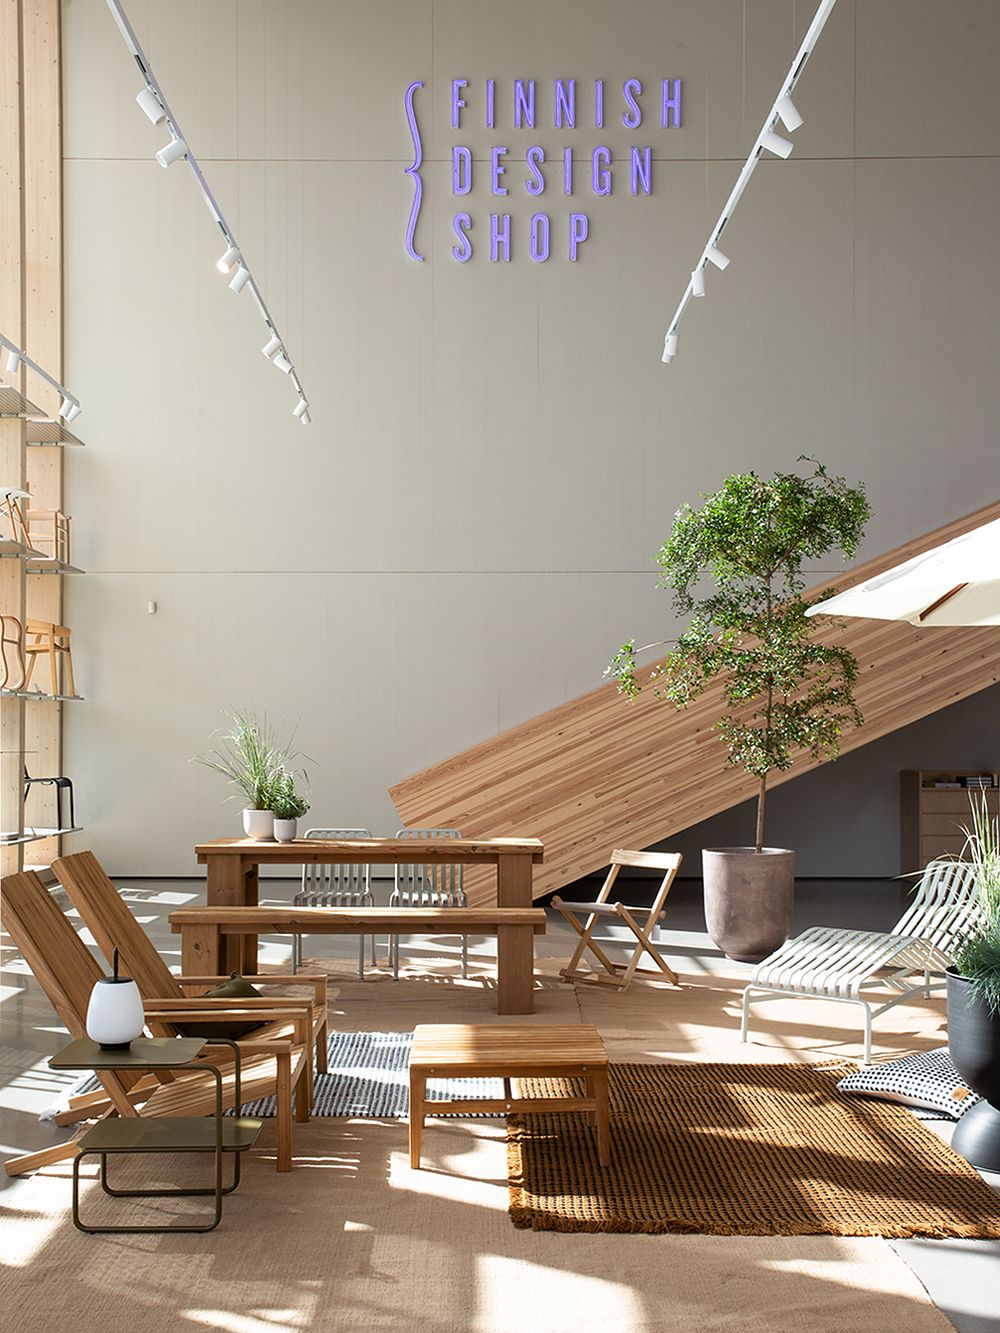 Finnish Design Shop showroom, Aviatie 2, Turku